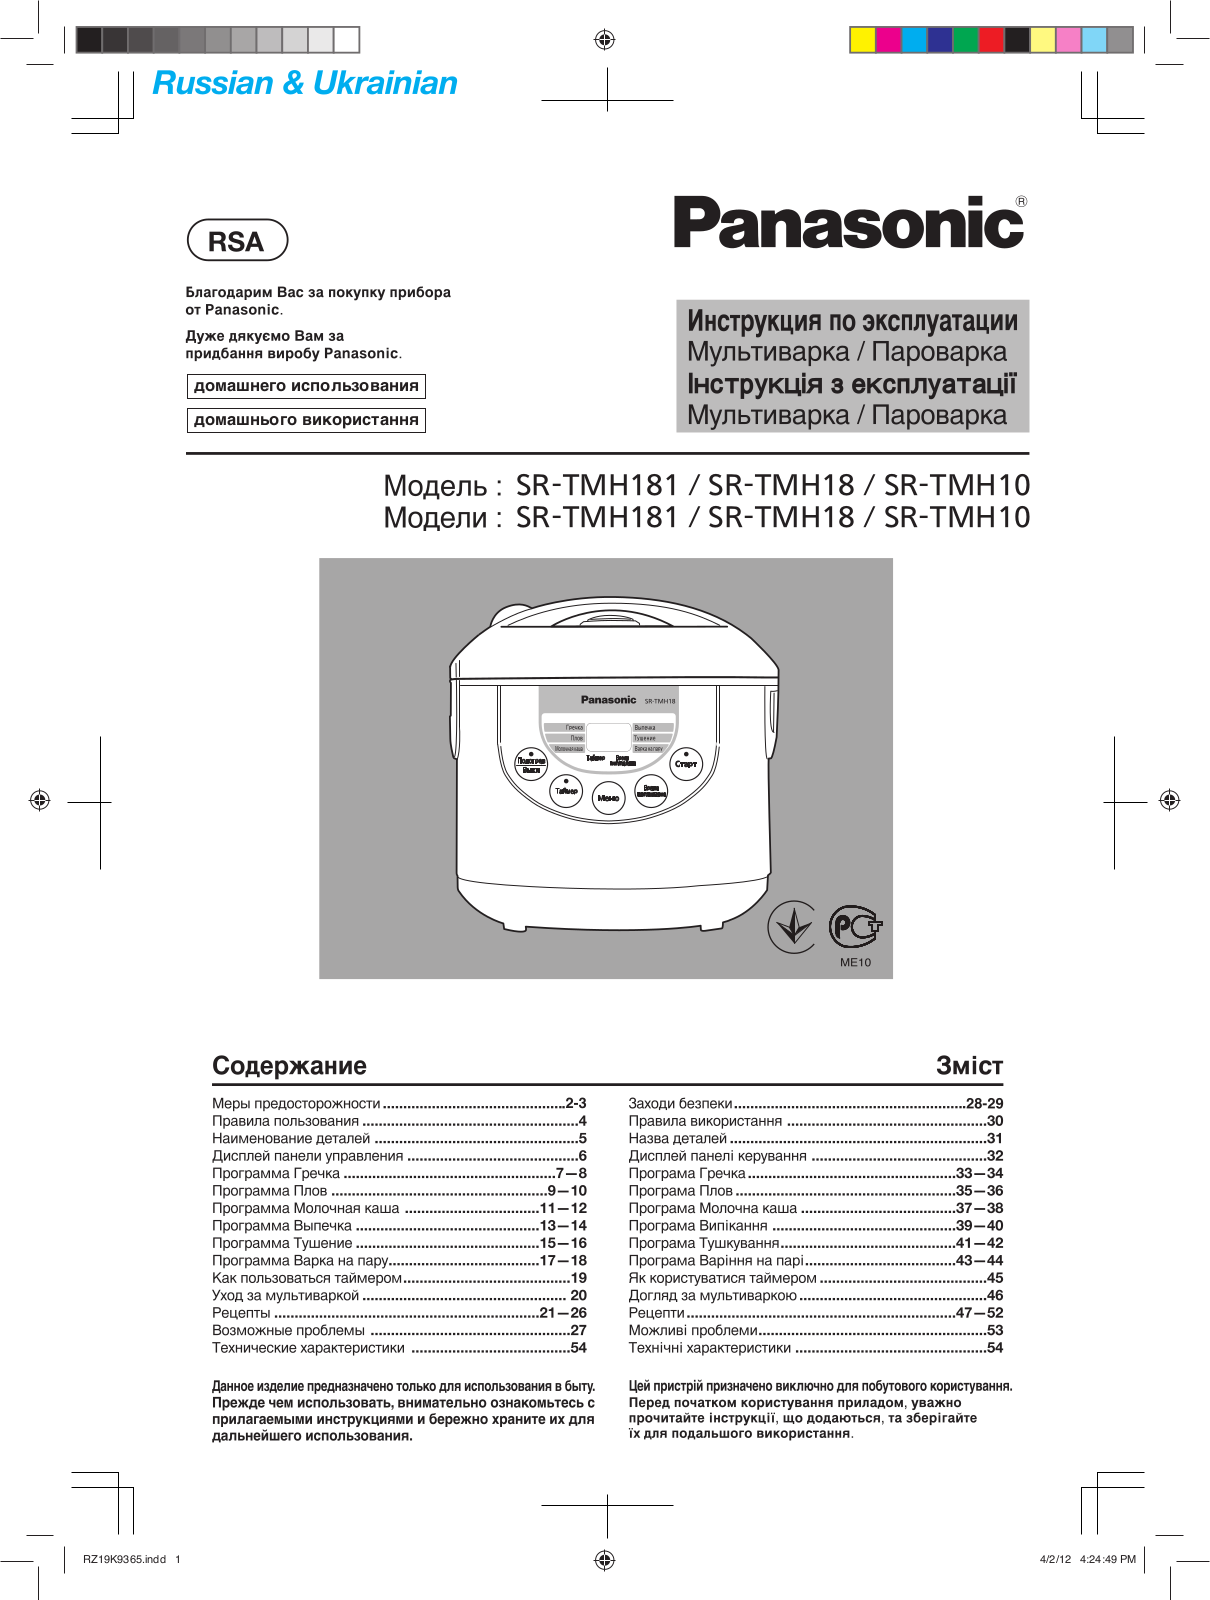 PANASONIC SR-TMH18, SR-TMH10 User Manual